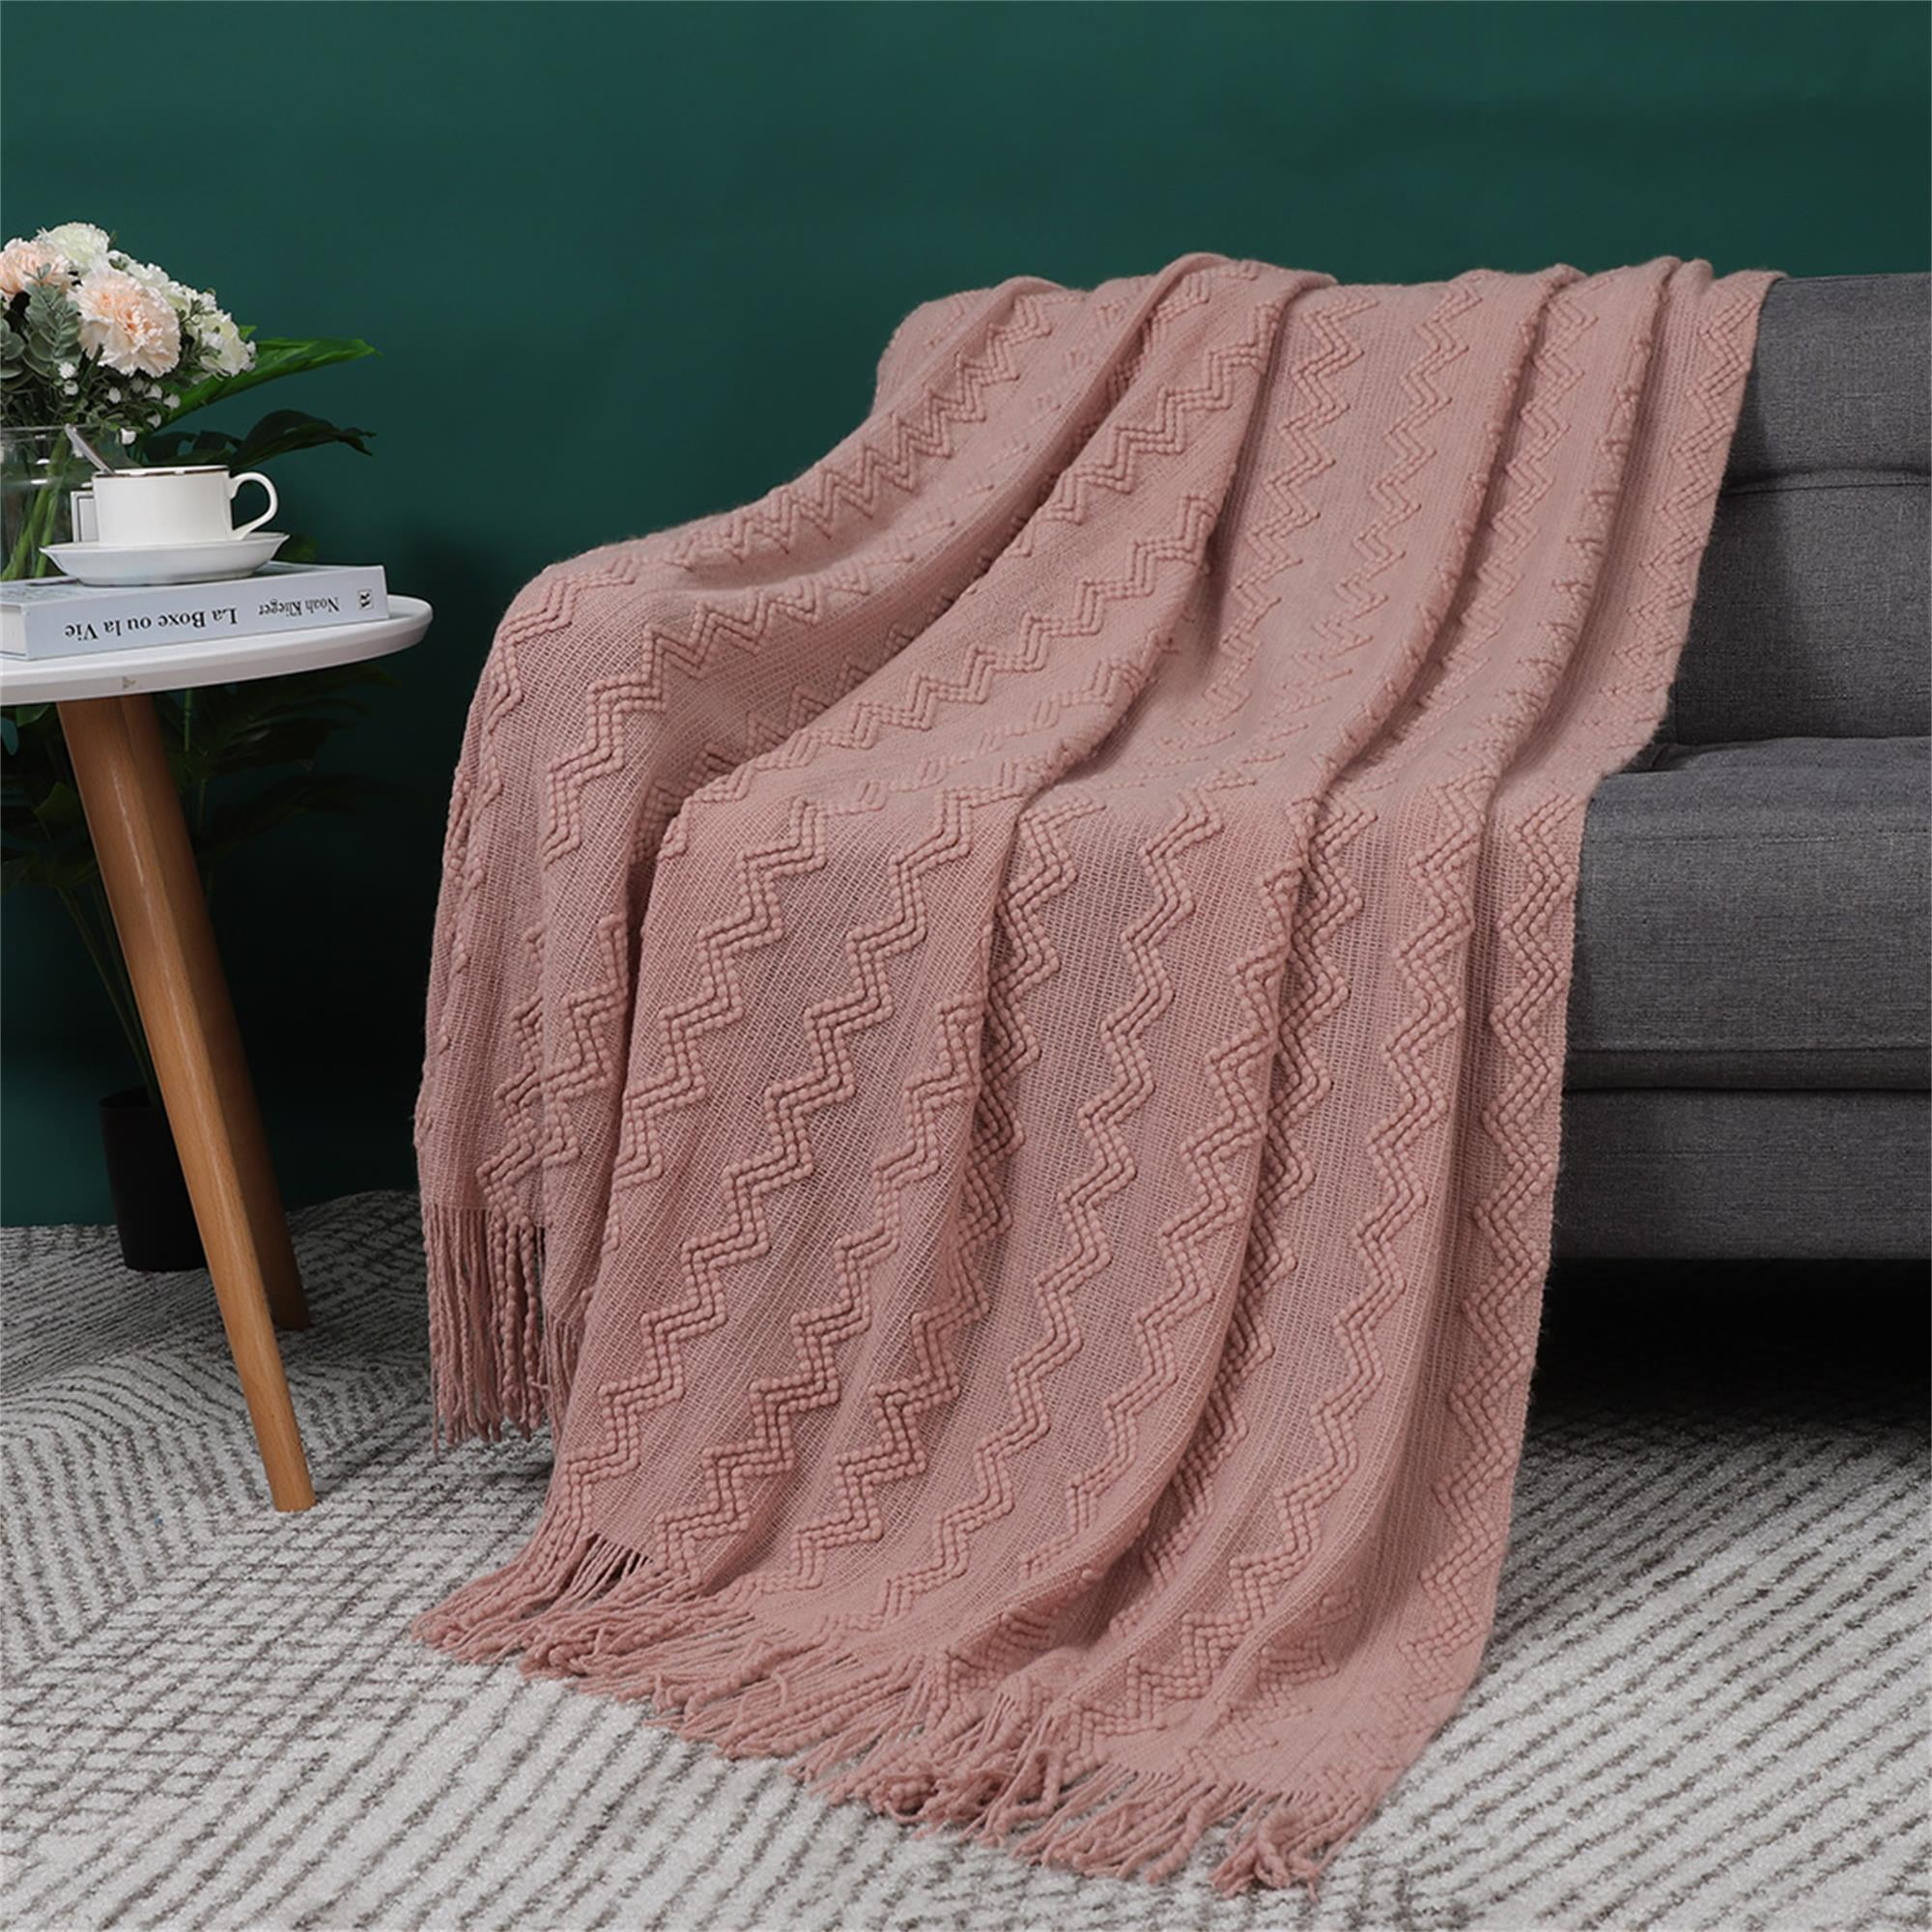 Piccocasa Soft Tassel Throw Blanket100 Arcylic Decorative Knitted Blanket 50x60 Inch Pink